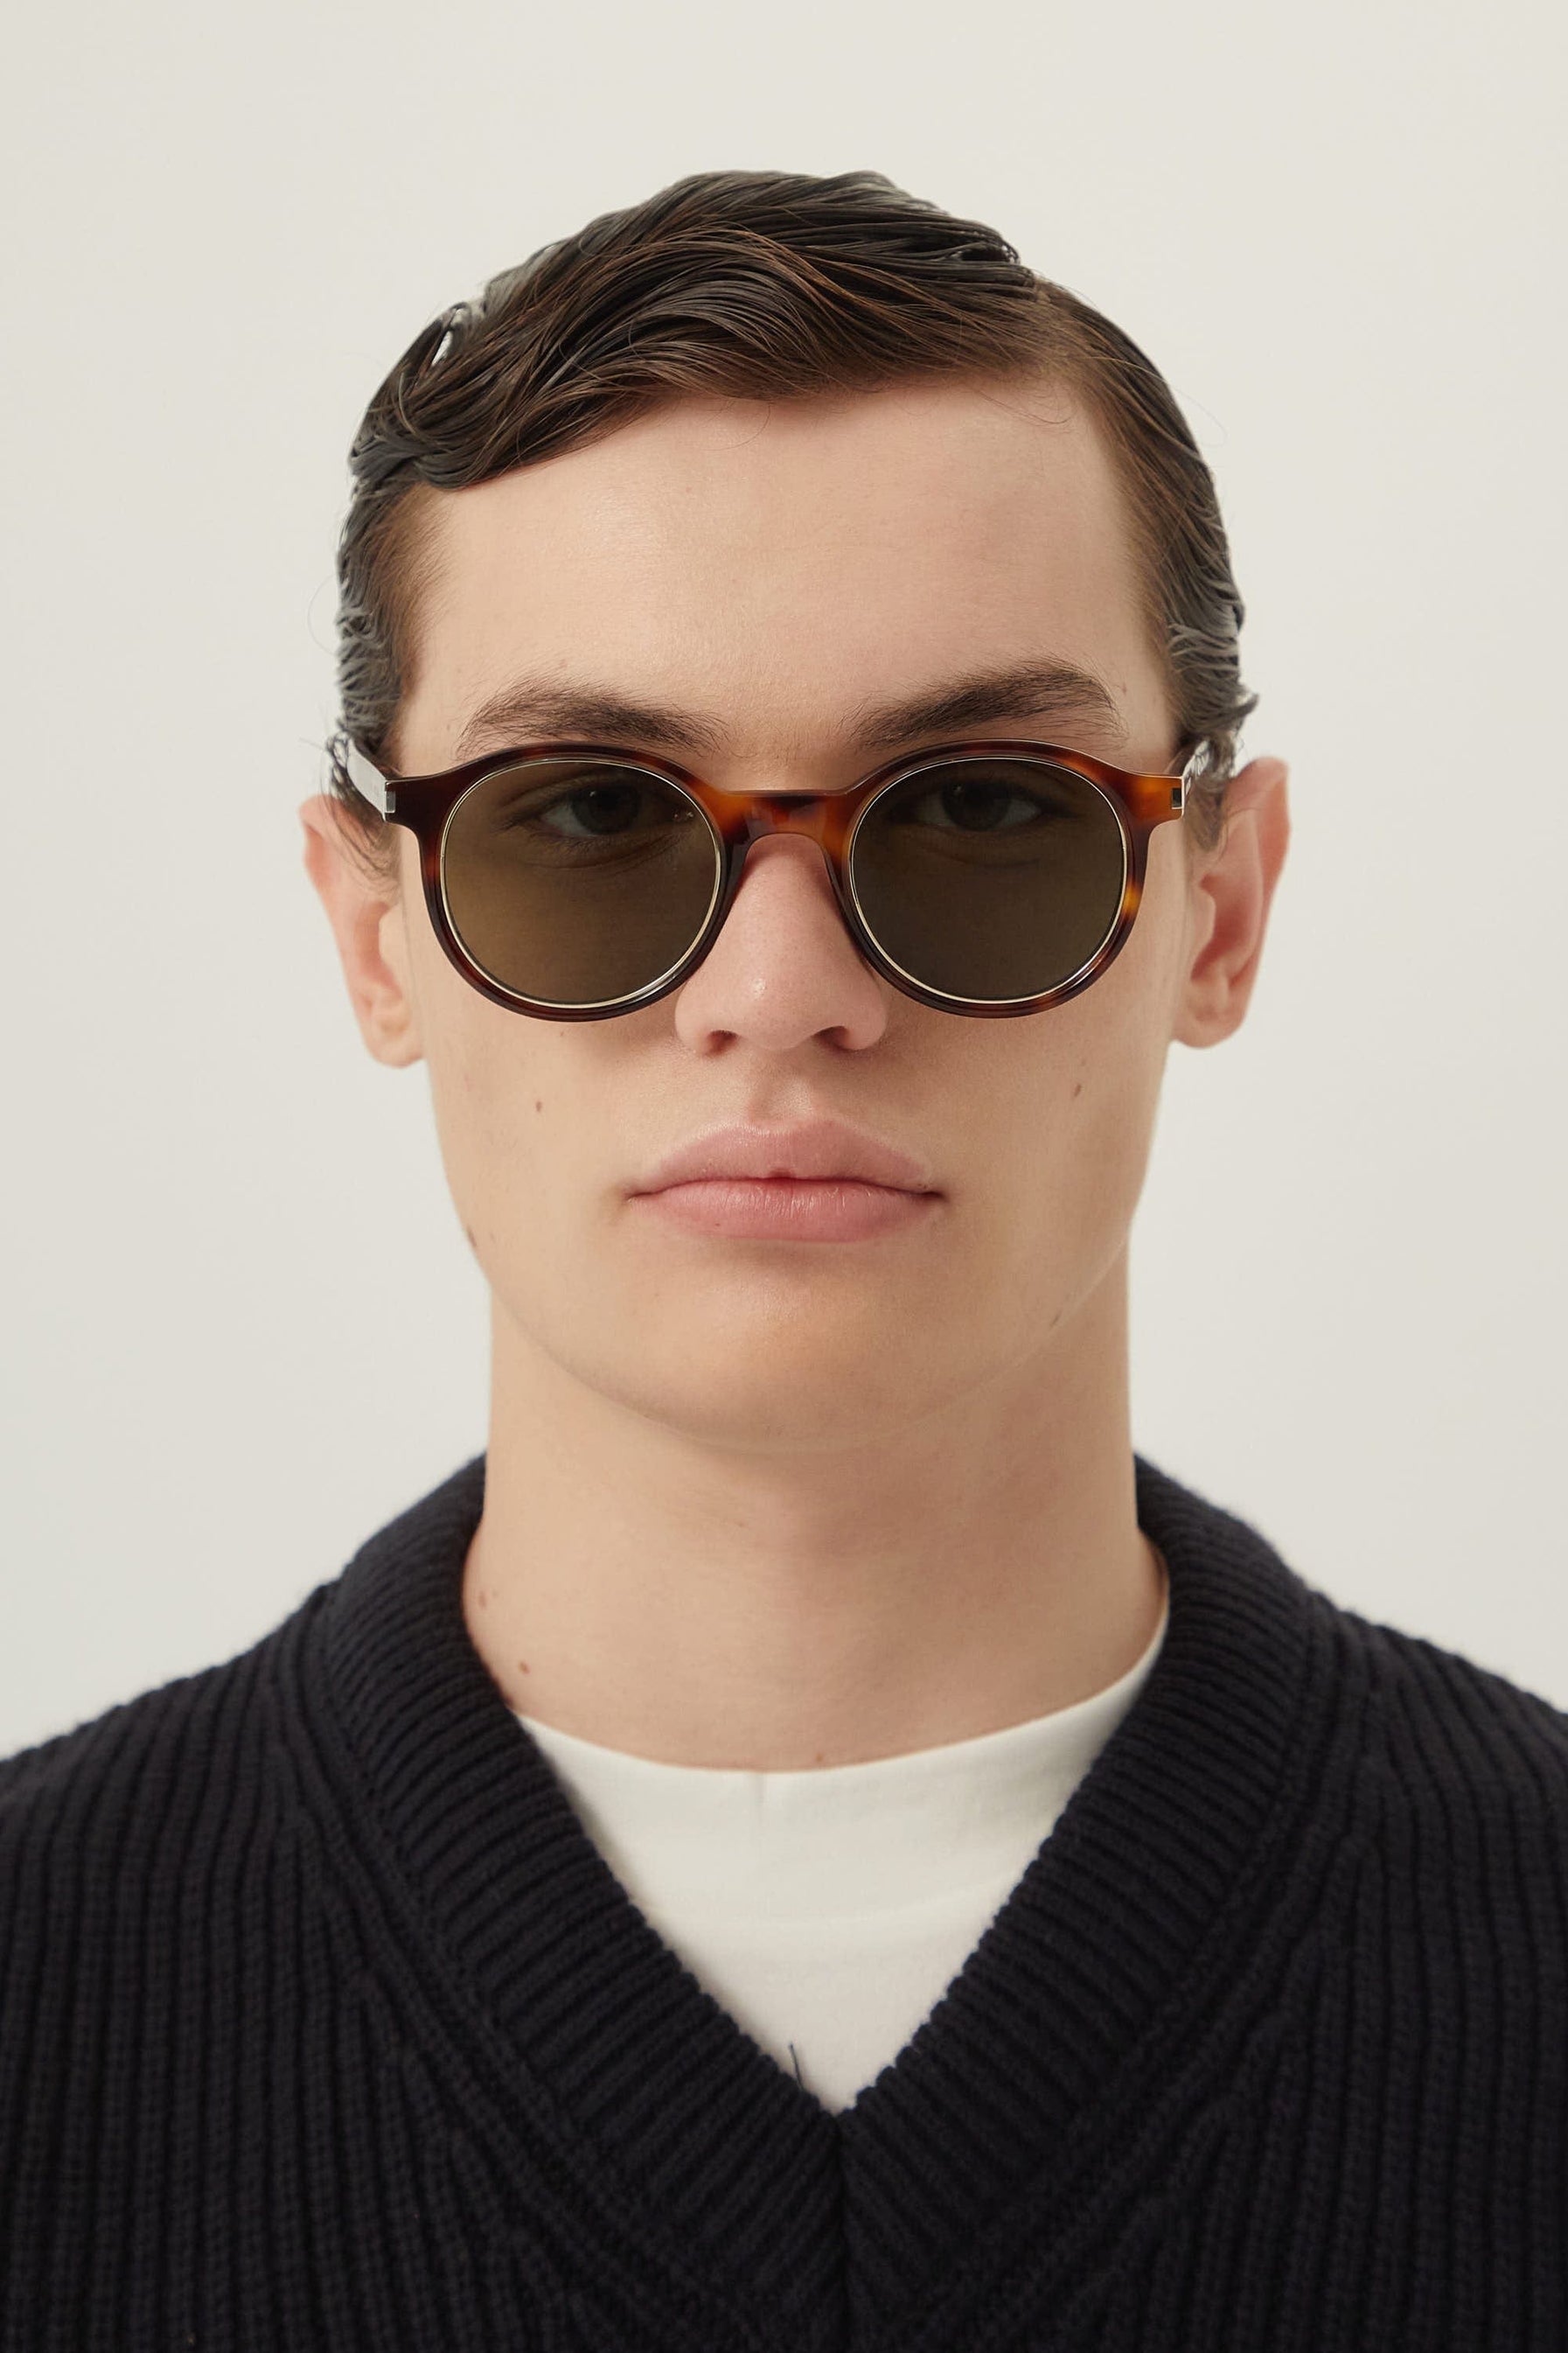 Saint Laurent classic havana round sunglasses - Eyewear Club